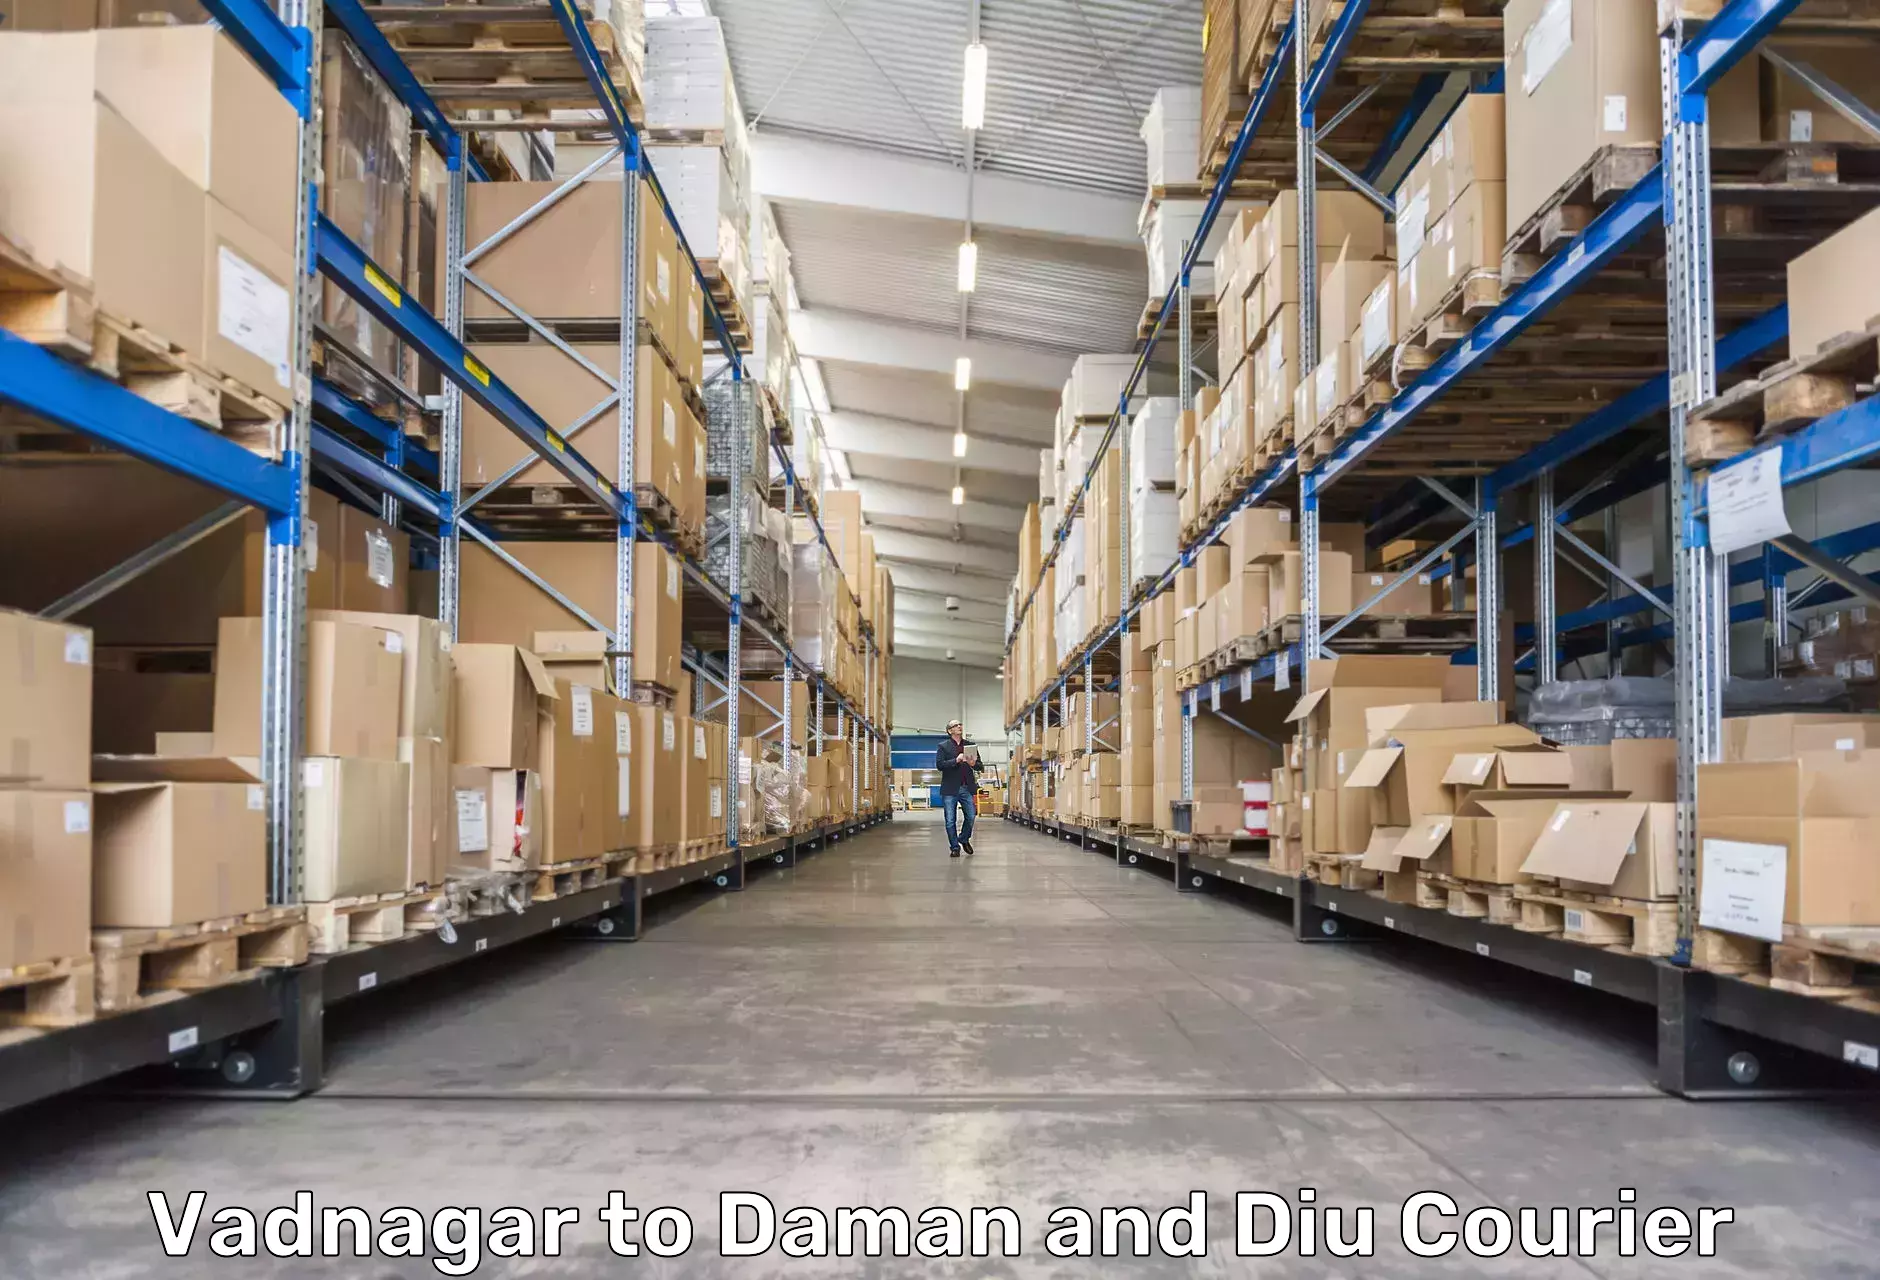 Courier service innovation Vadnagar to Daman and Diu